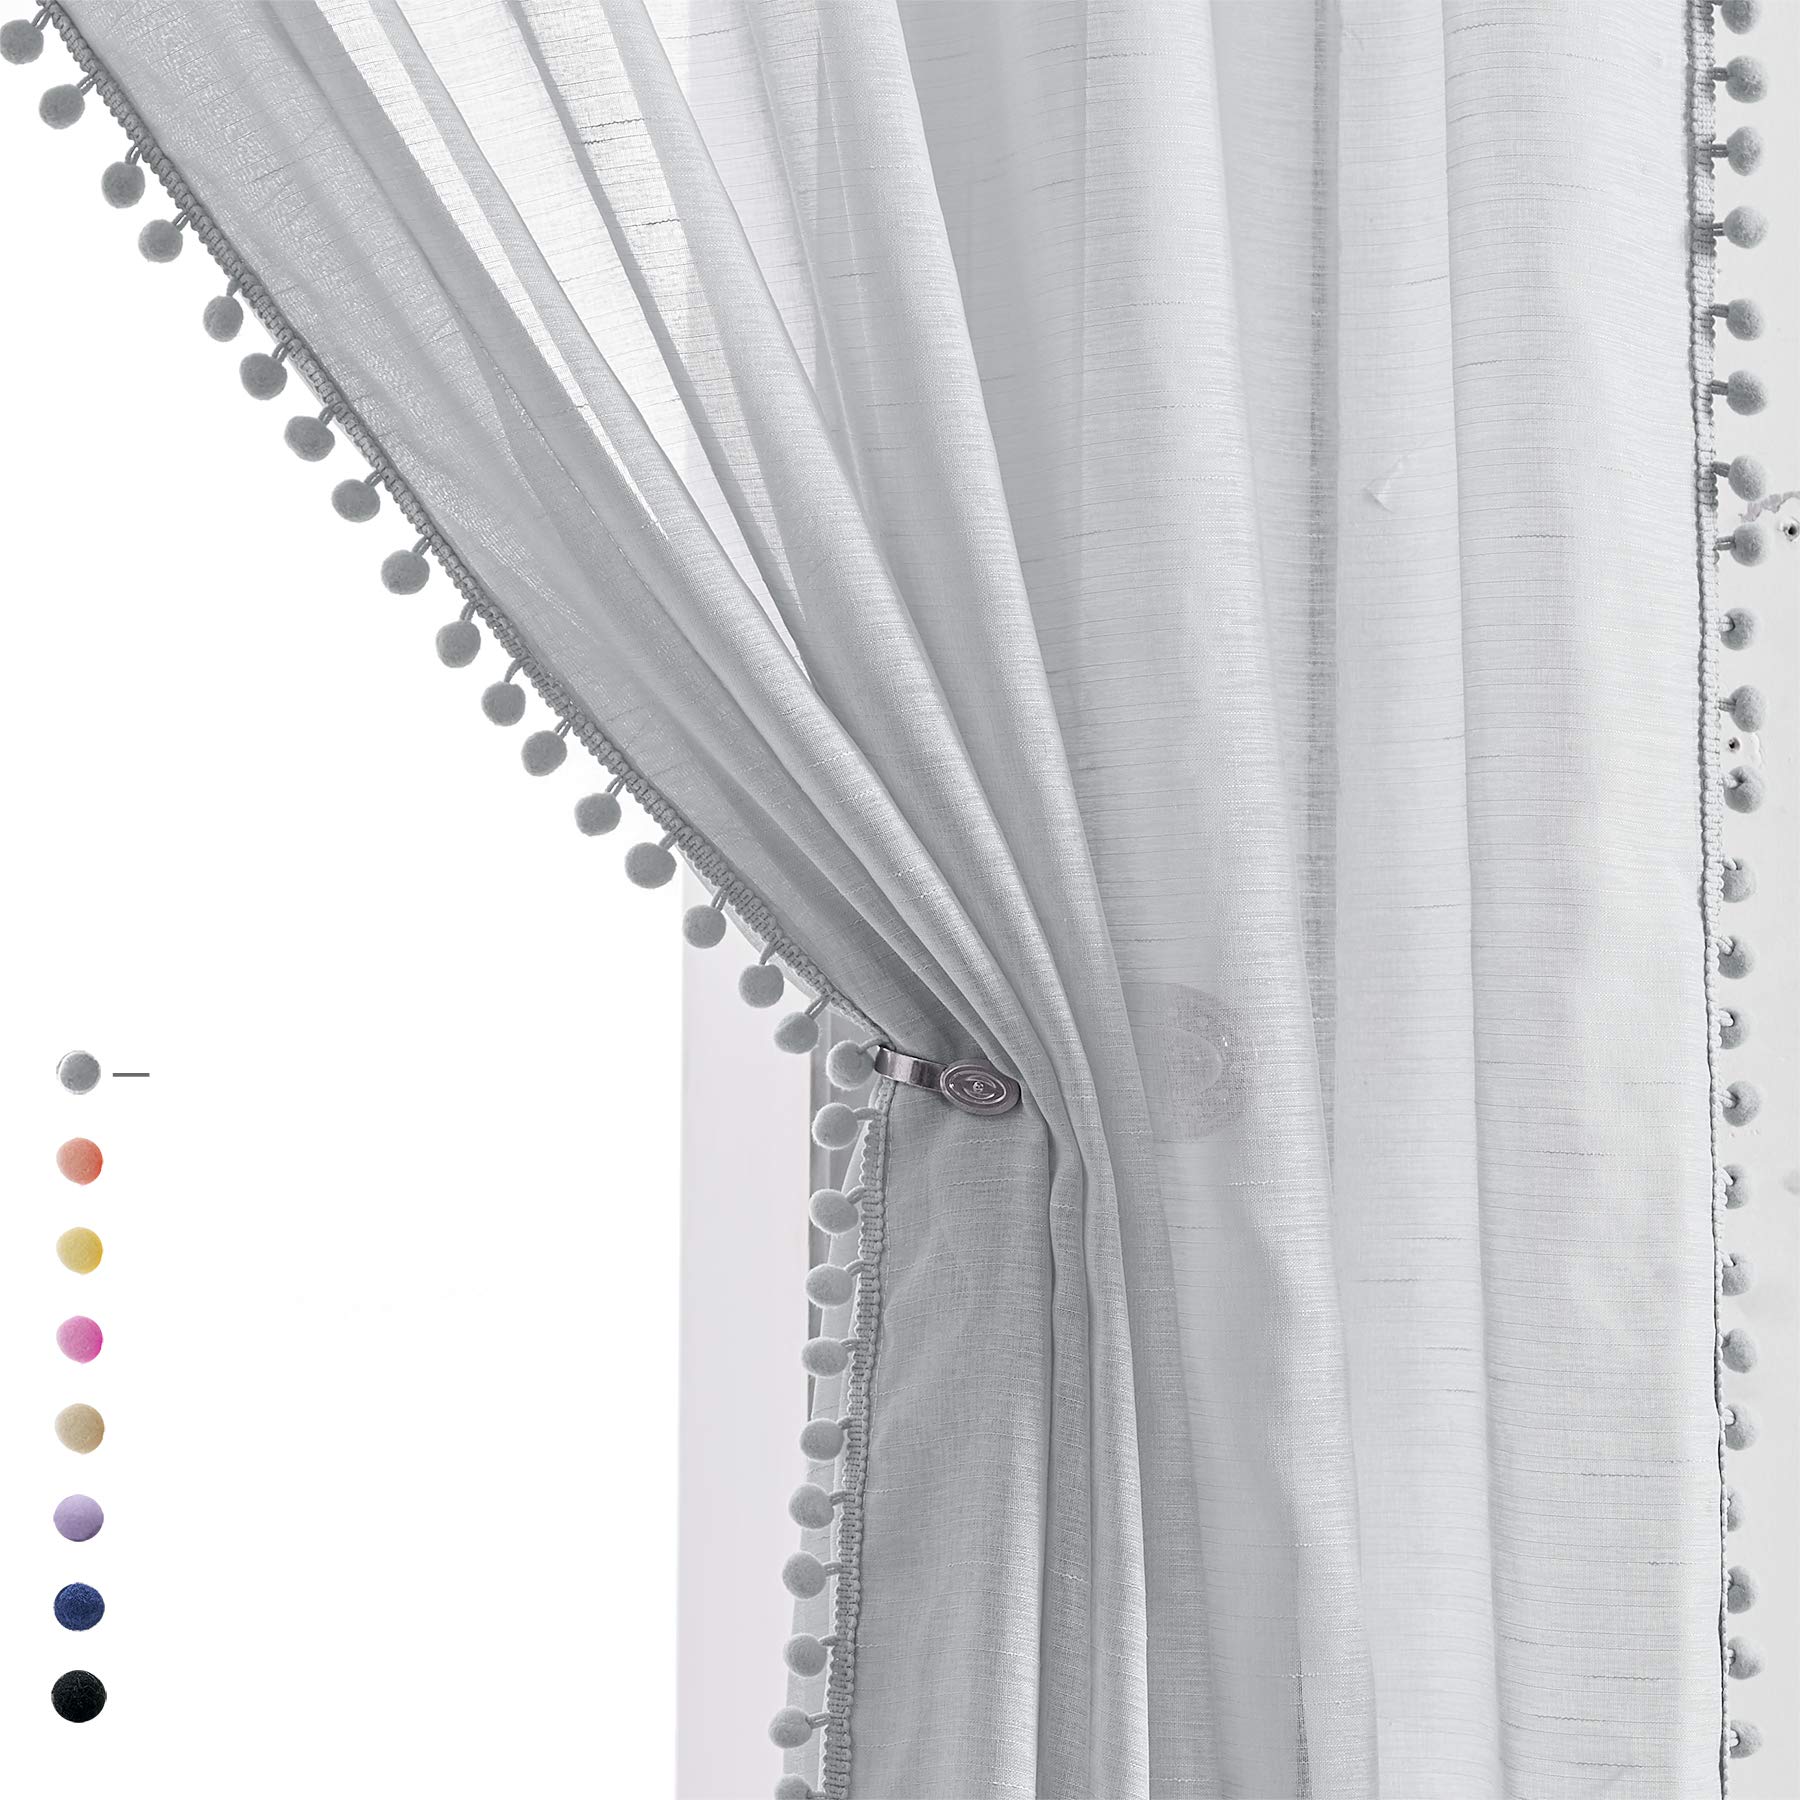 Treatmentex Pom-Pom grey Sheer curtains for Bedroom 63 Window Drapes Rod Pocket Textured Sheer curtain for Kids Room 52 w 2 Pane